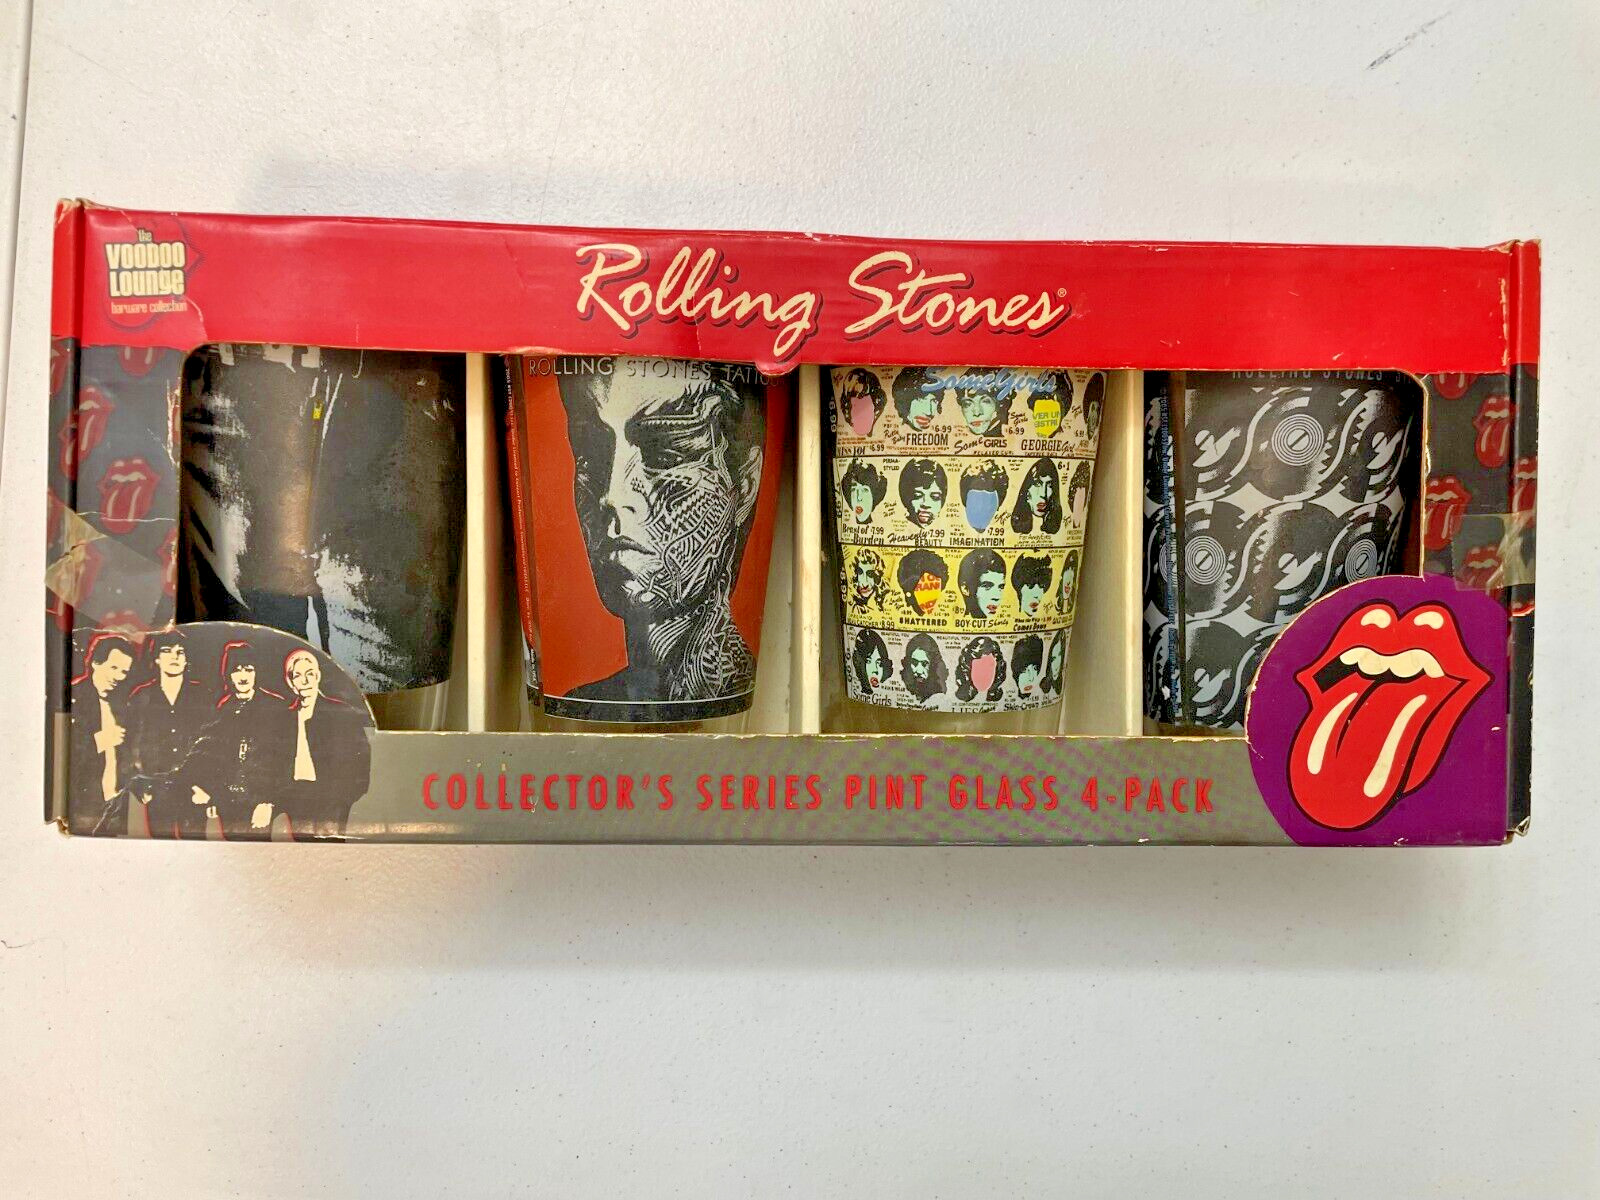 2005 Rolling Stones Drink Glasses 4PK Set VooDoo Lounge Barware Collection 16 Oz